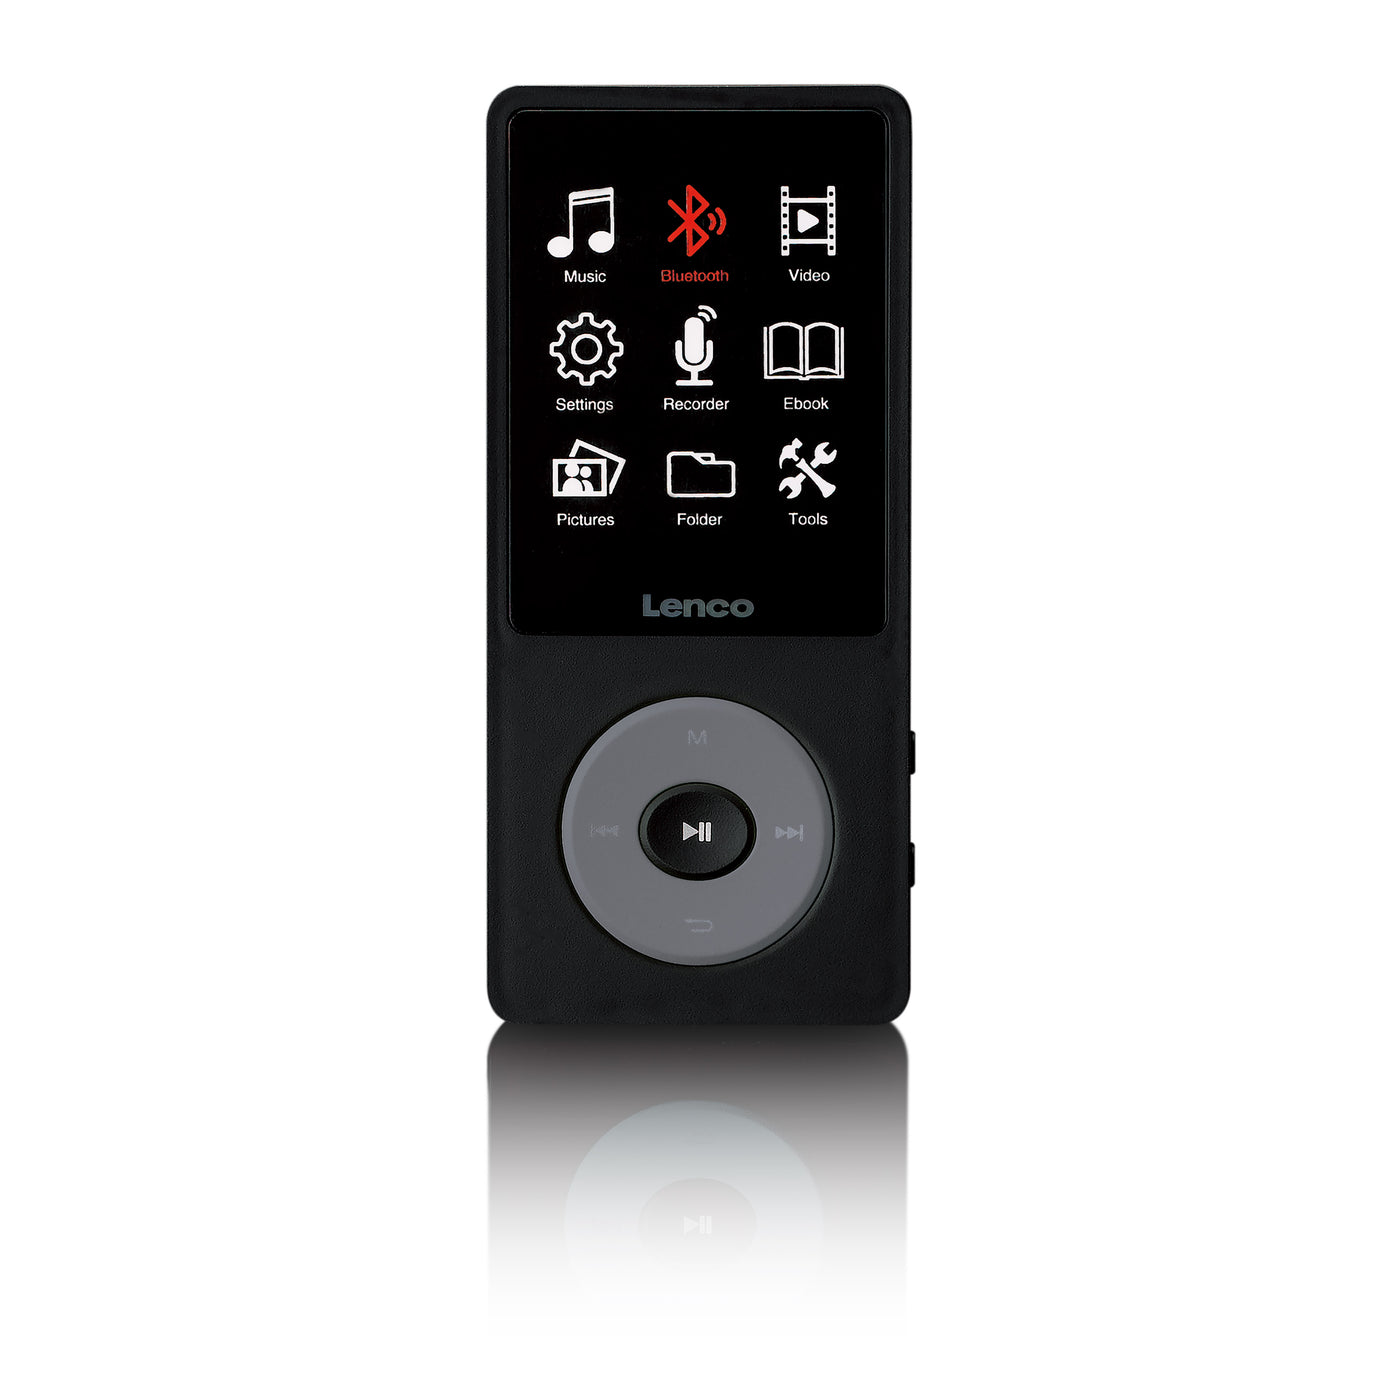 LENCO Xemio-860BK - MP3/MP4 player with Bluetooth® and 8GB internal memory - Black